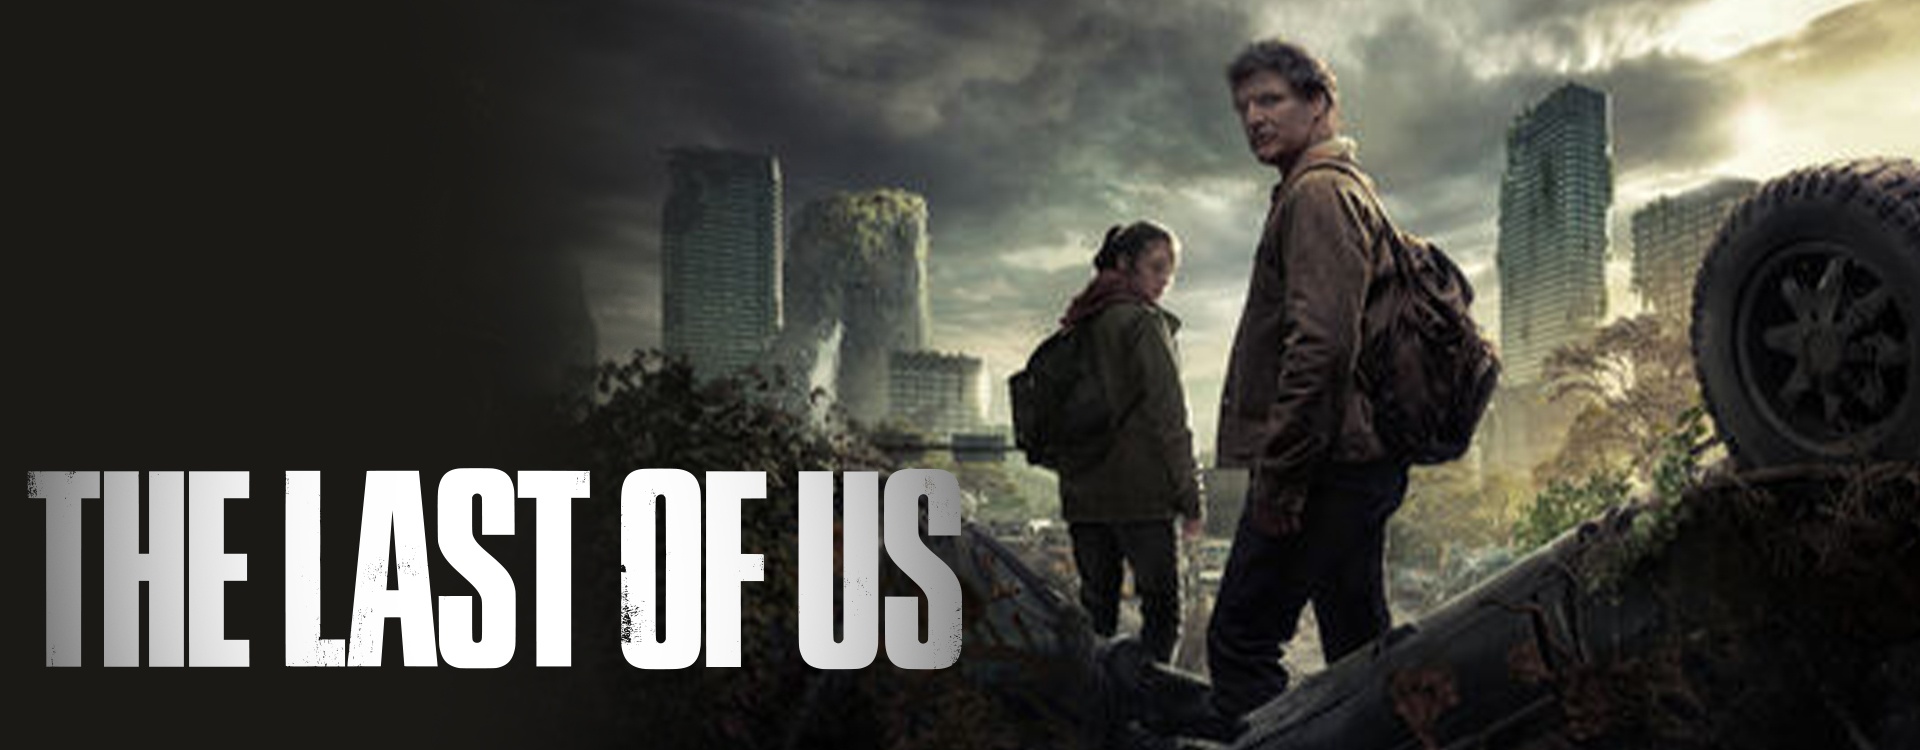 آخرین اخبار پیرامون سریال The Last of us